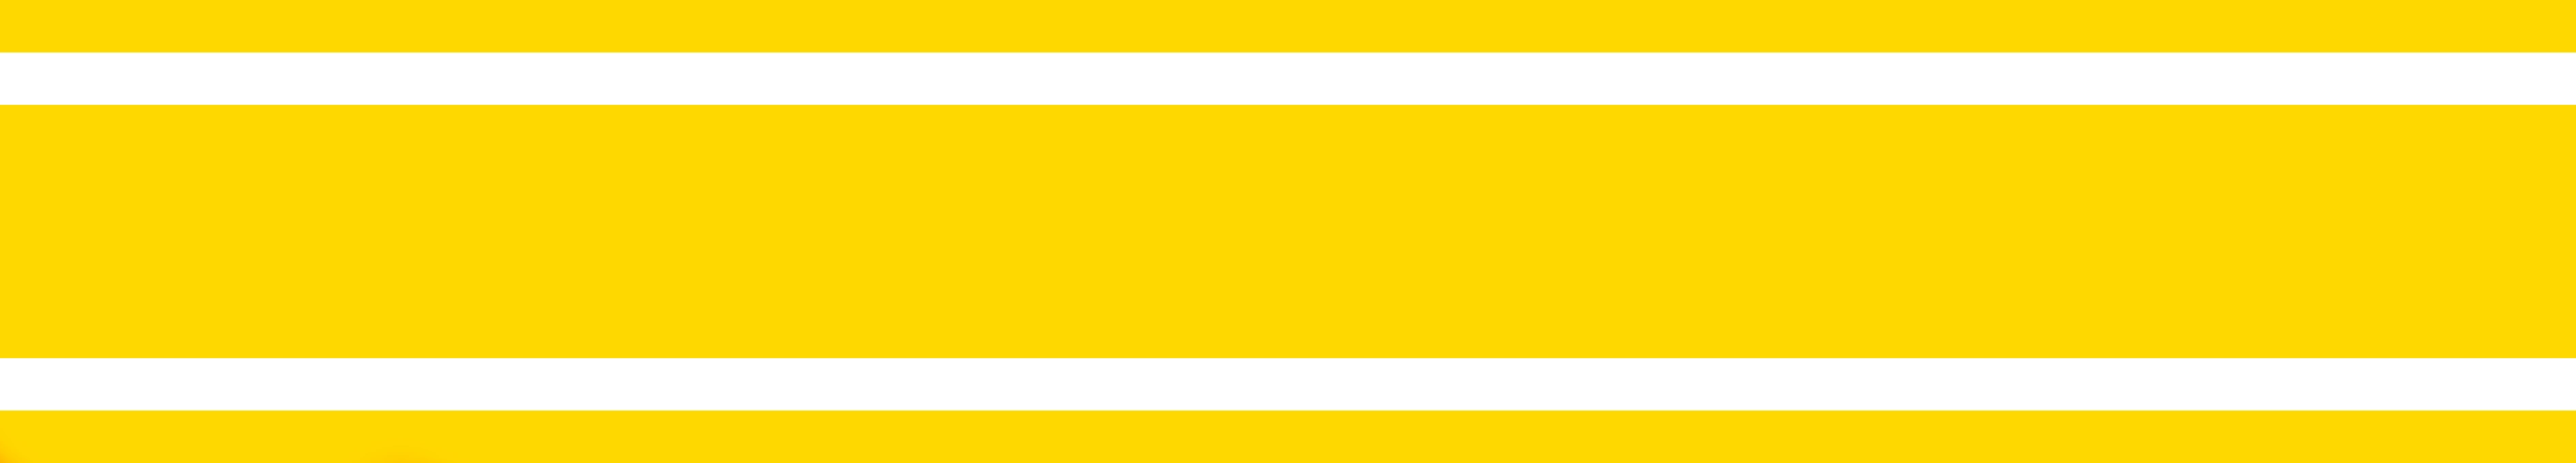 Tripple Stripe   Horizontal   Yellow